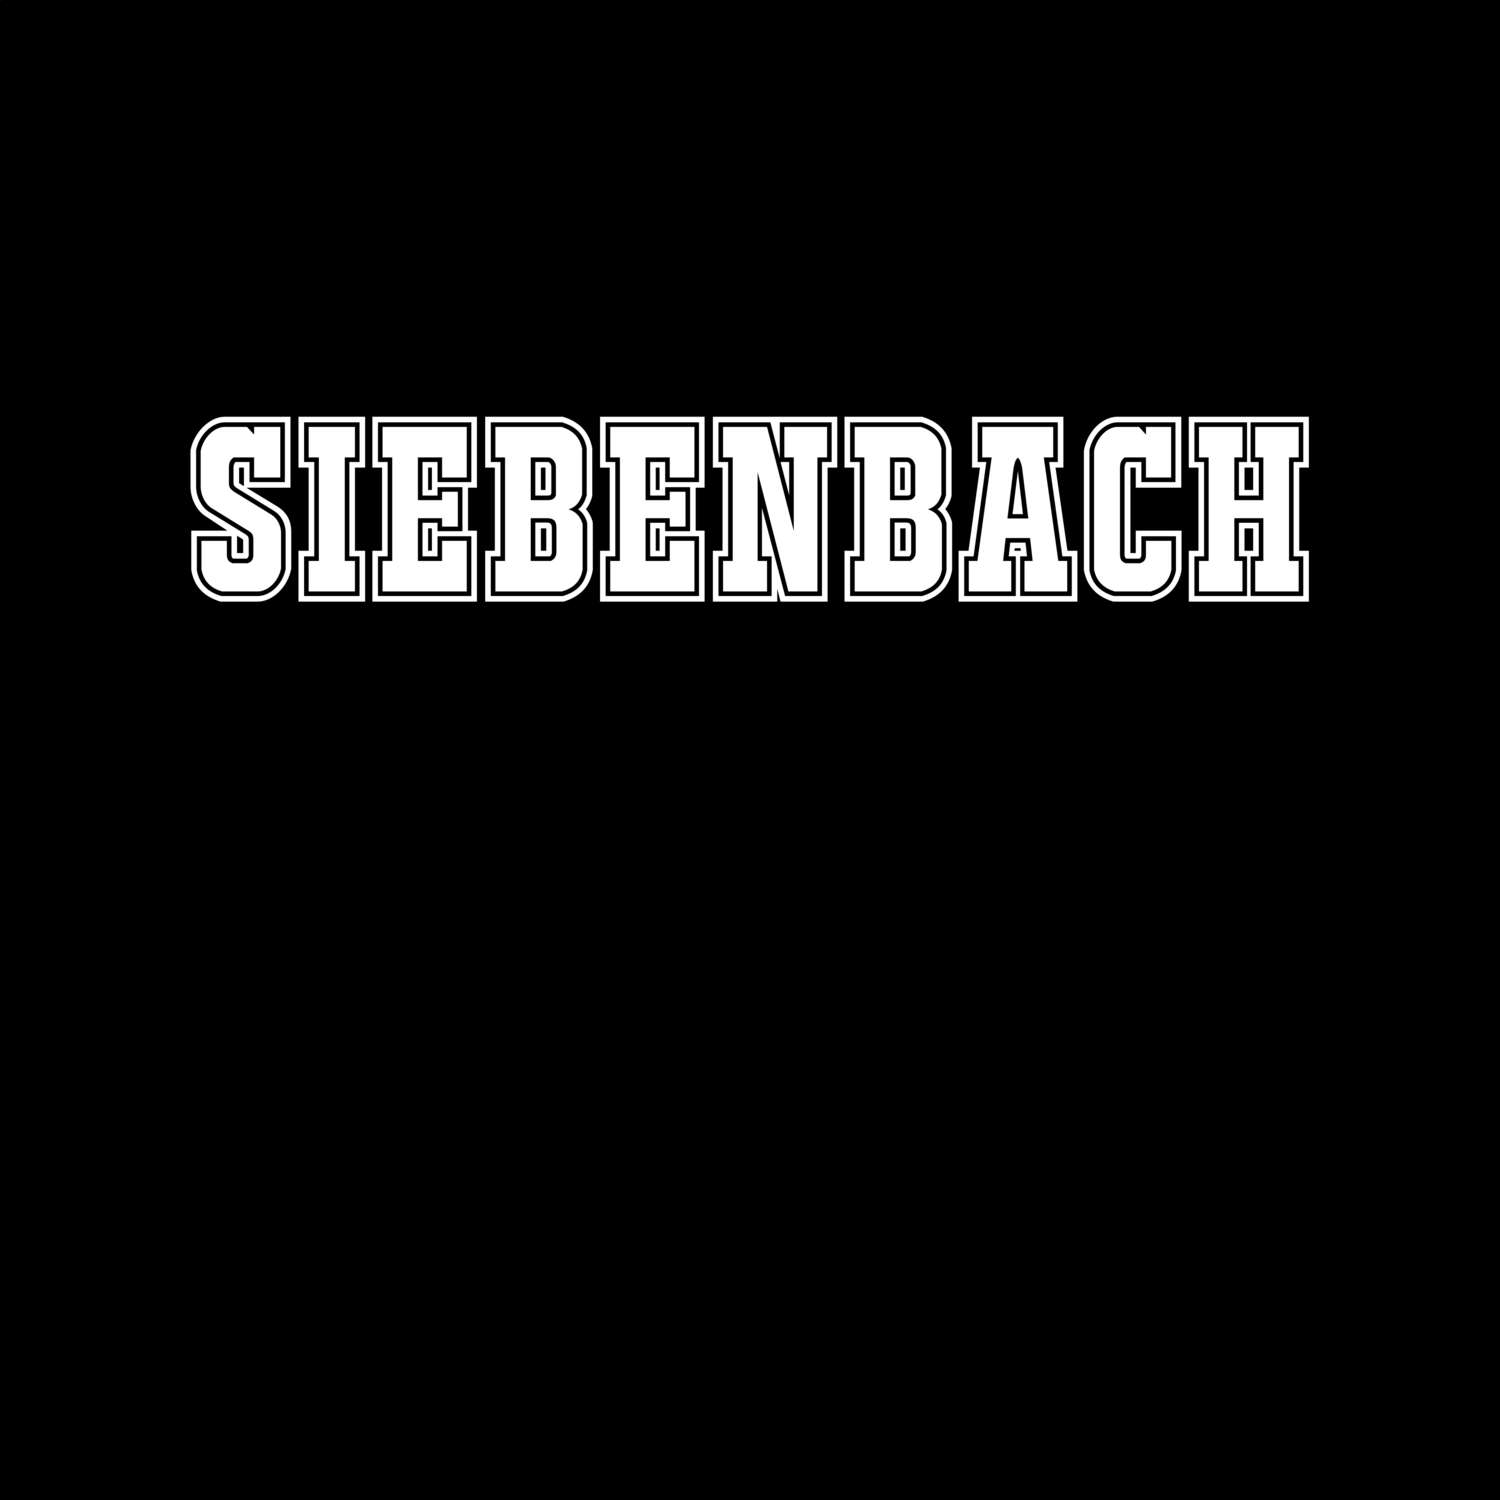 Siebenbach T-Shirt »Classic«